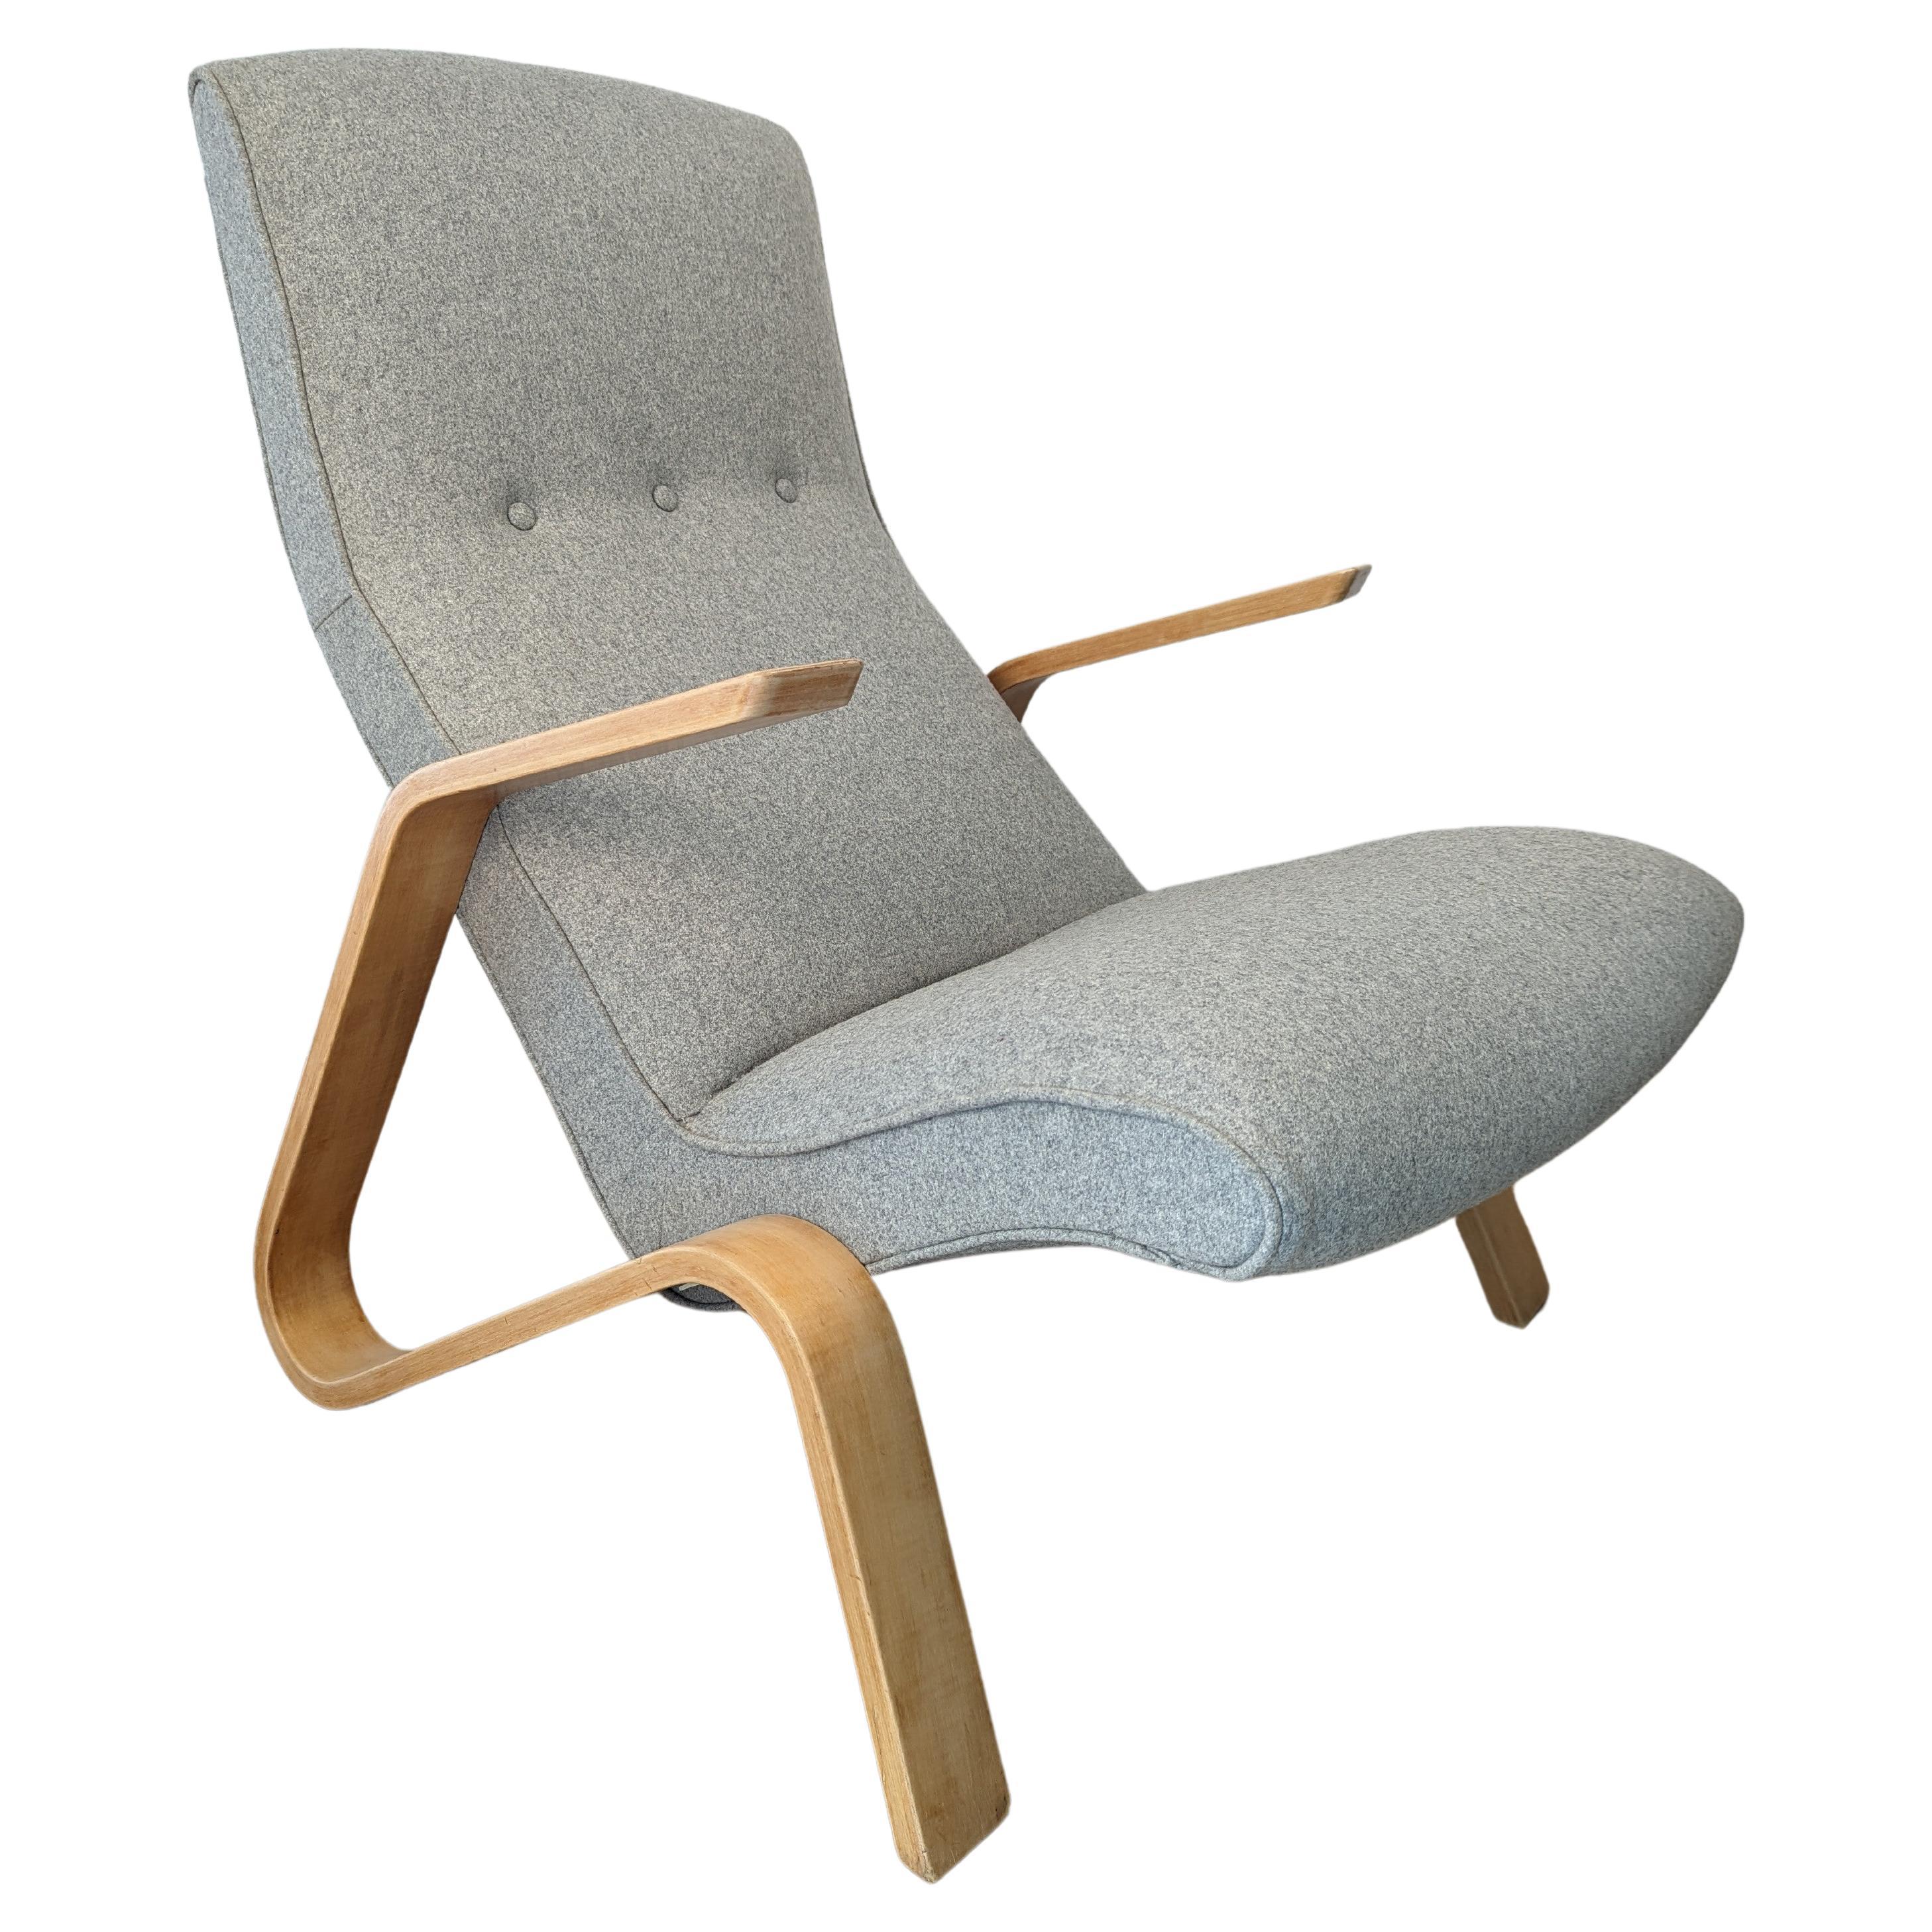 Mid-century Grasshopper chair by Eero Saarinen for Knoll (1950s)